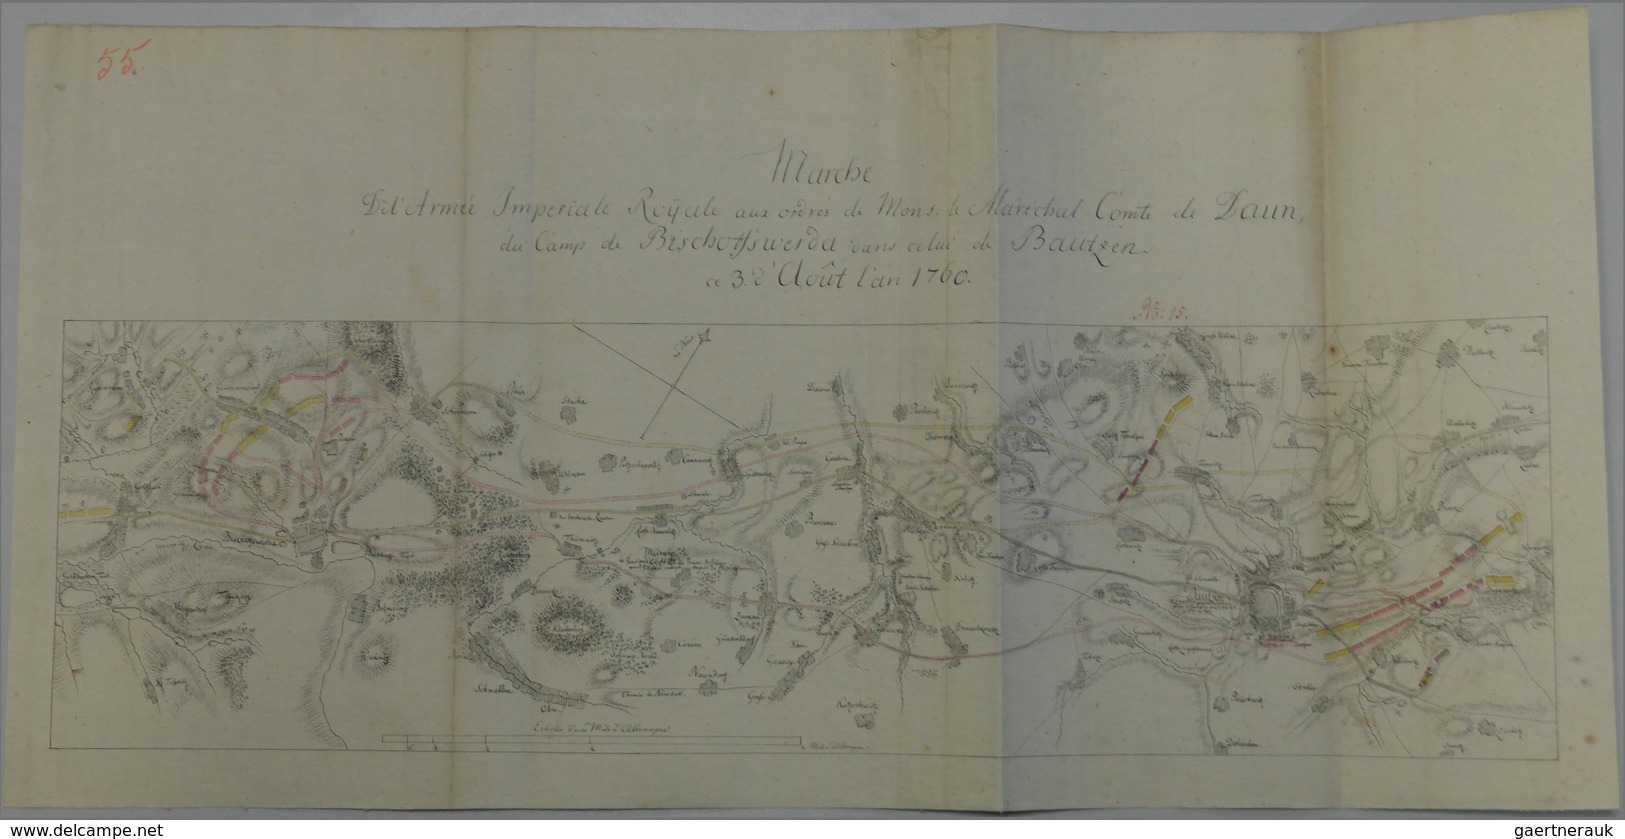 Landkarten Und Stiche: 1760 Battle Manuscript Map From The Austria 7 Years War. Original Manuscript - Geography